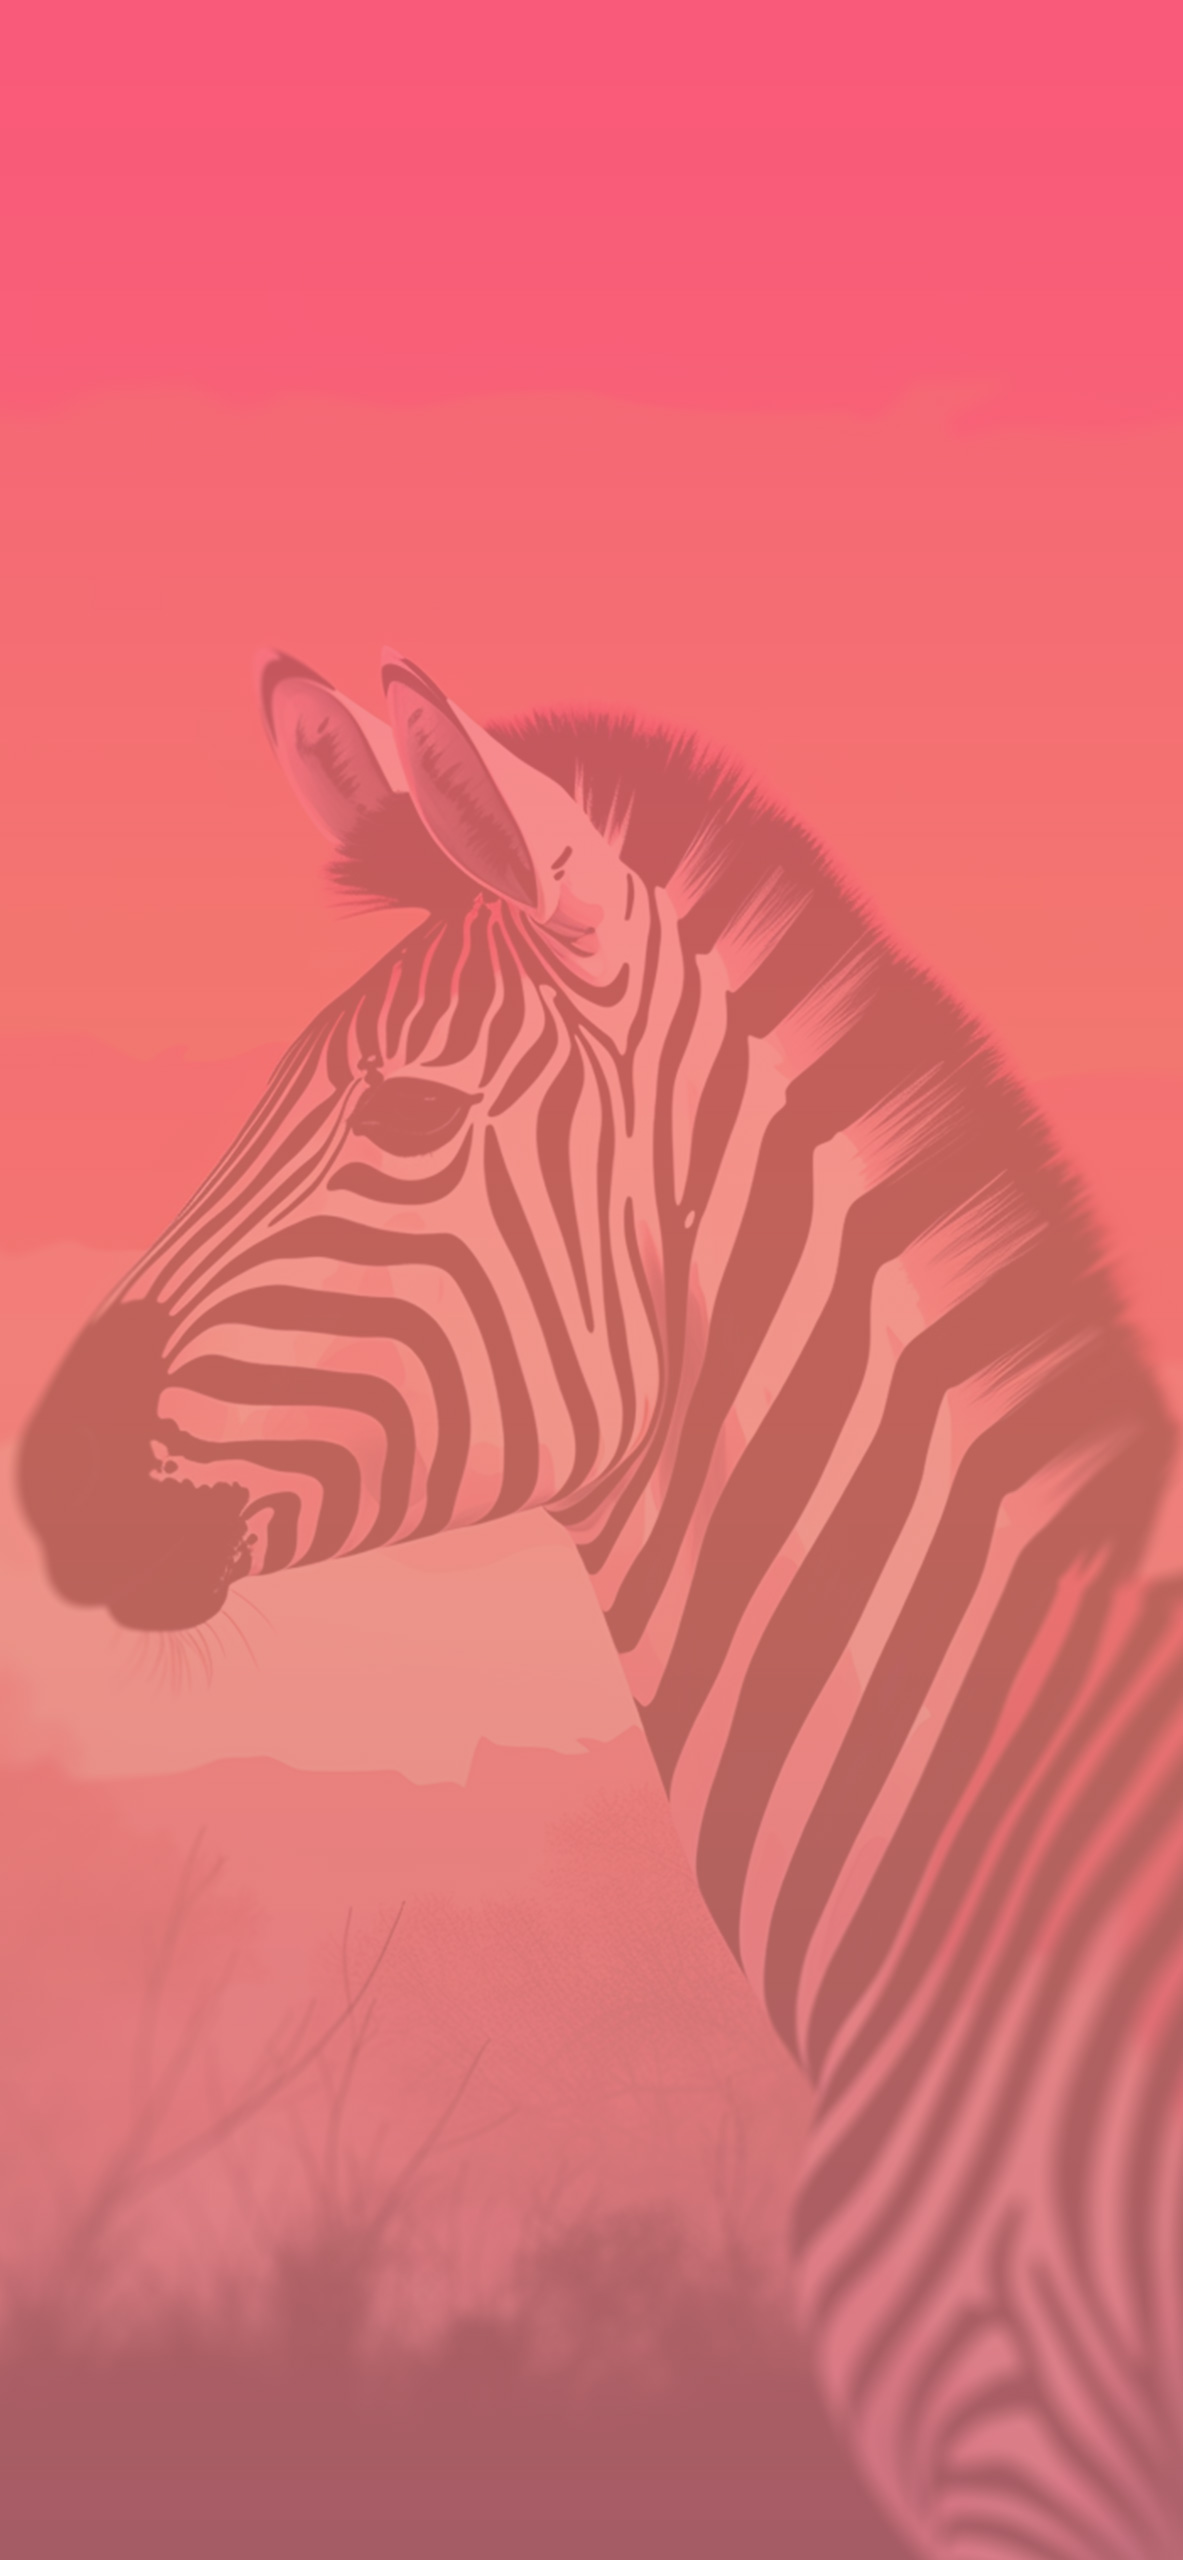 zebra hot pink background